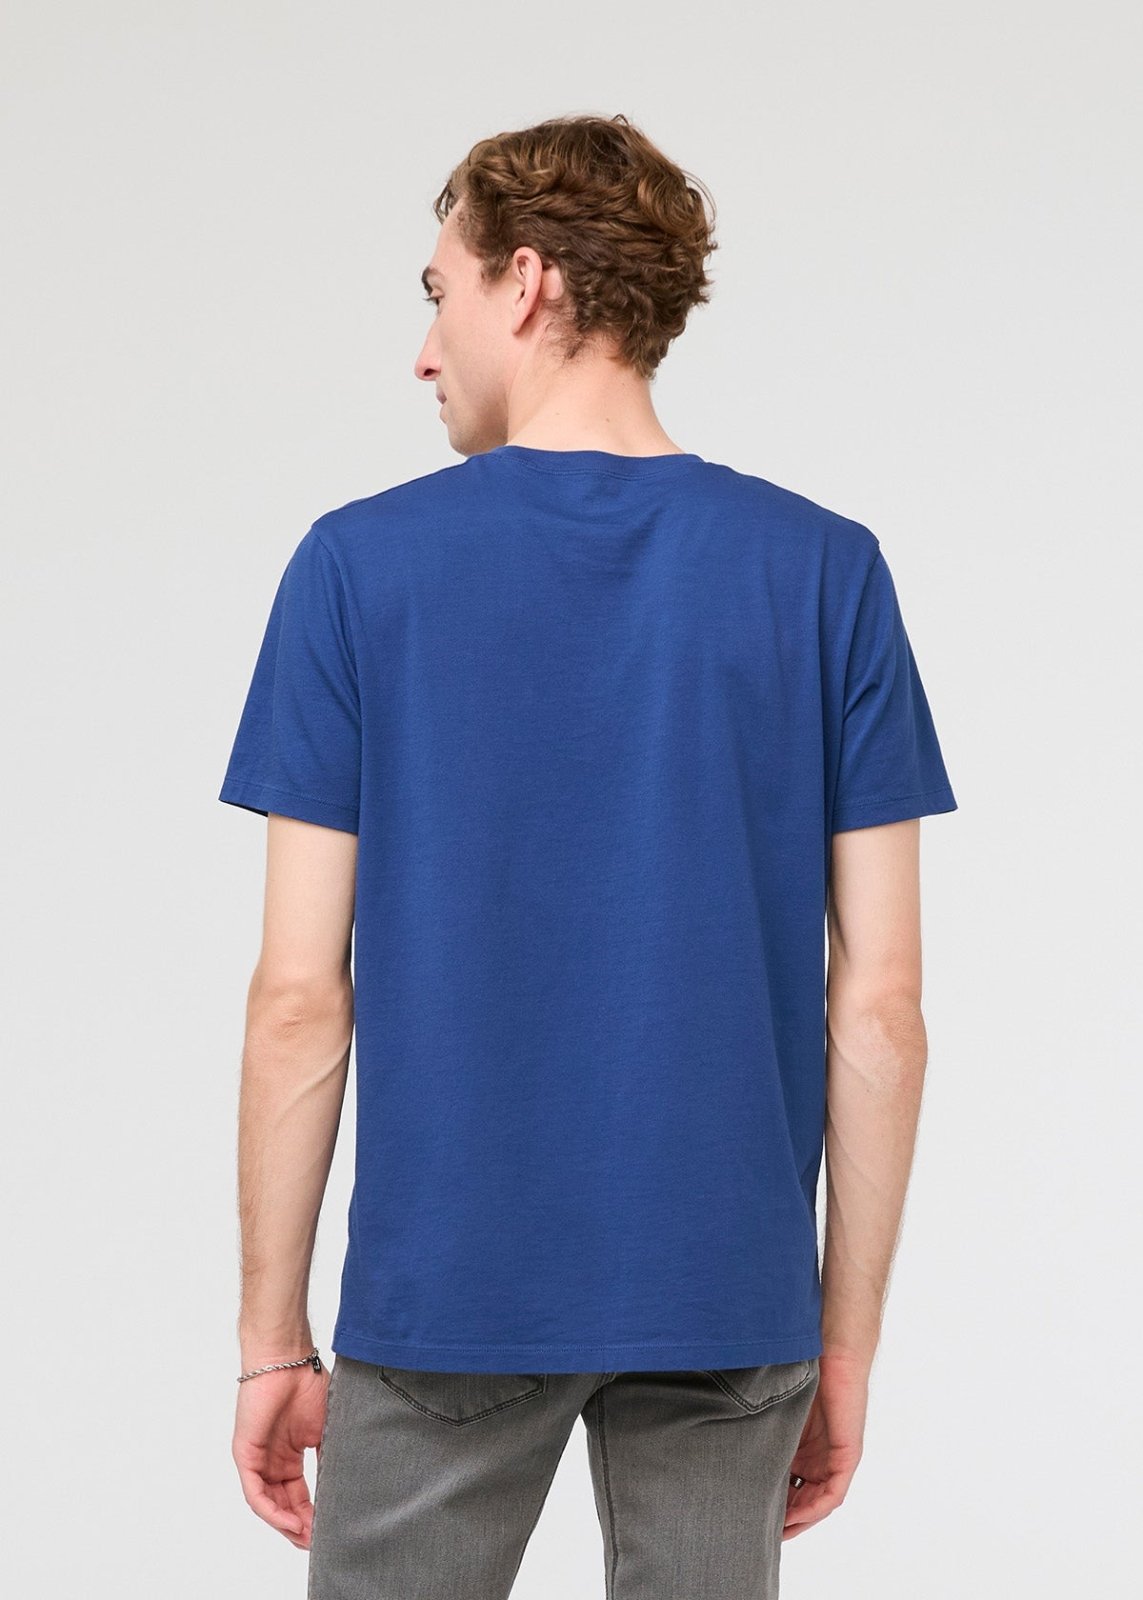 mens 100% pima cotton blue t-shirt back